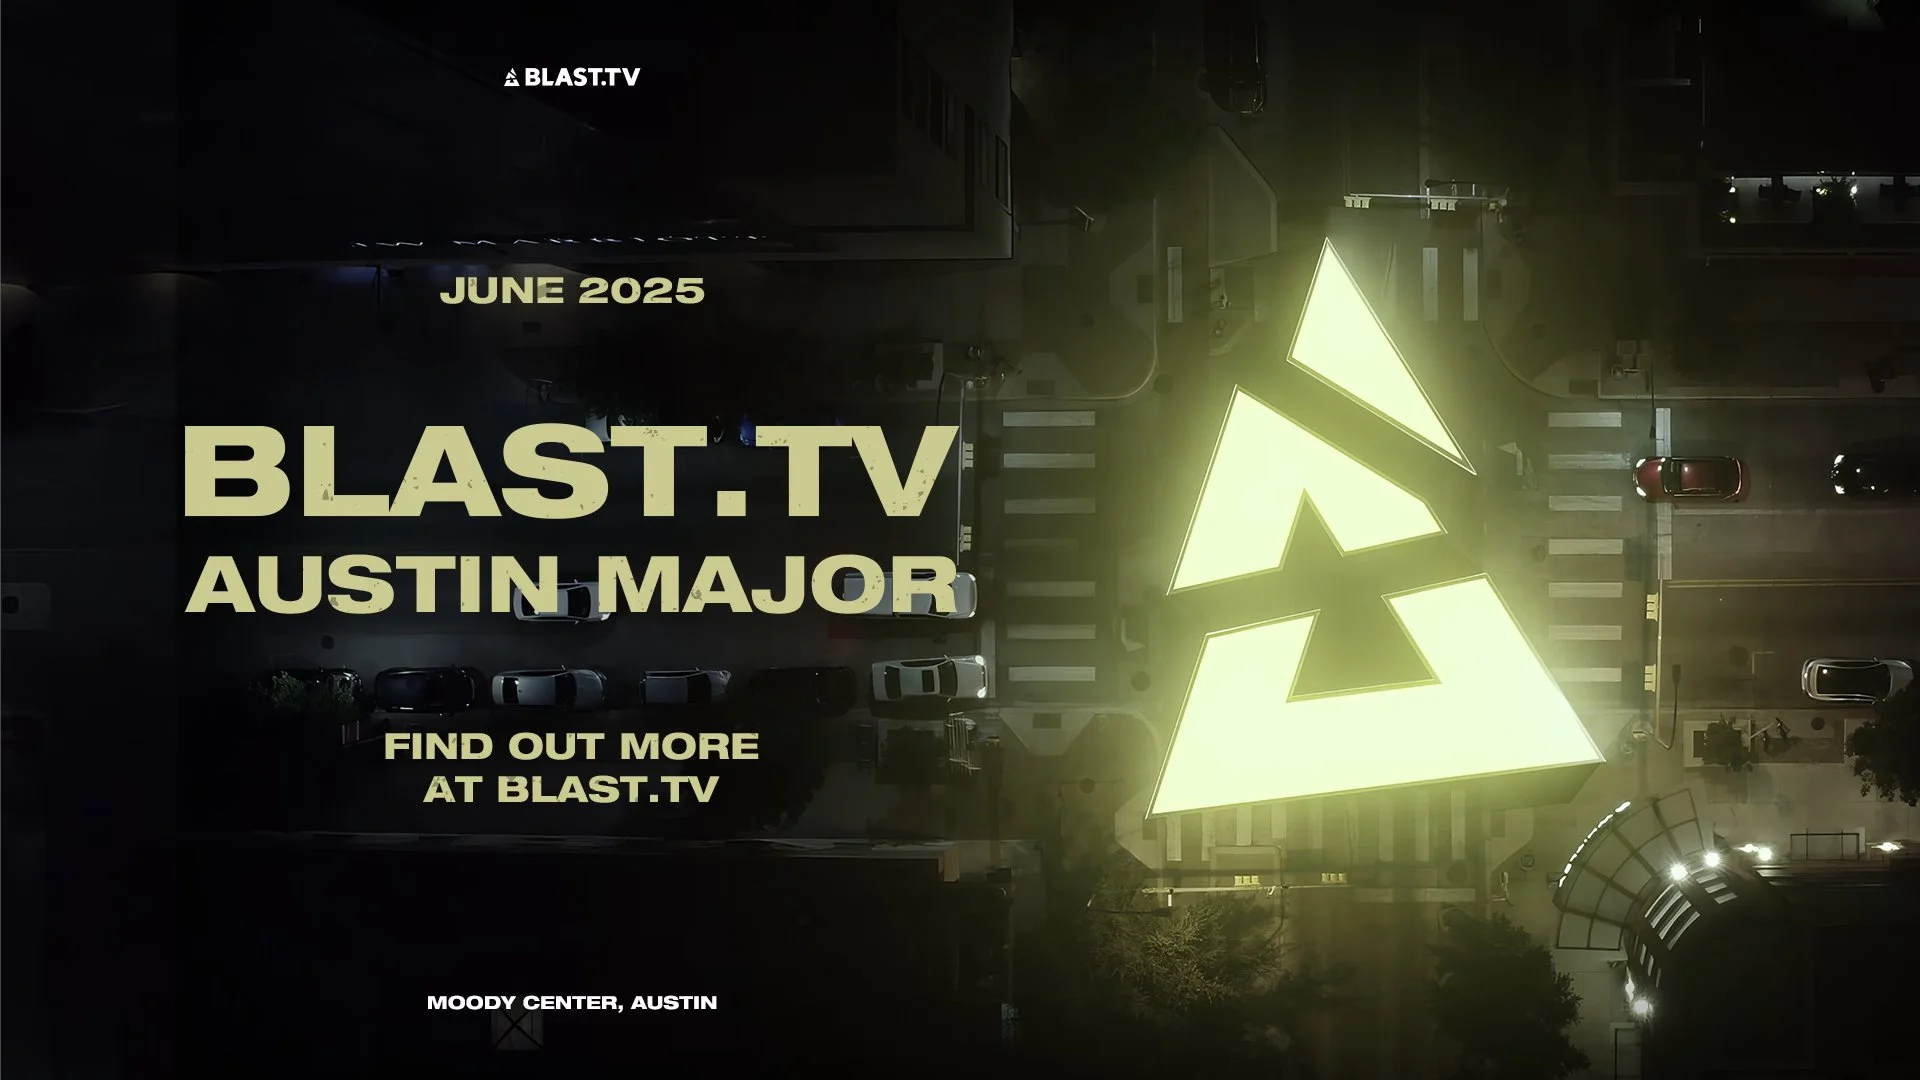 BLAST.TV AUSTIN MAJOR 2025